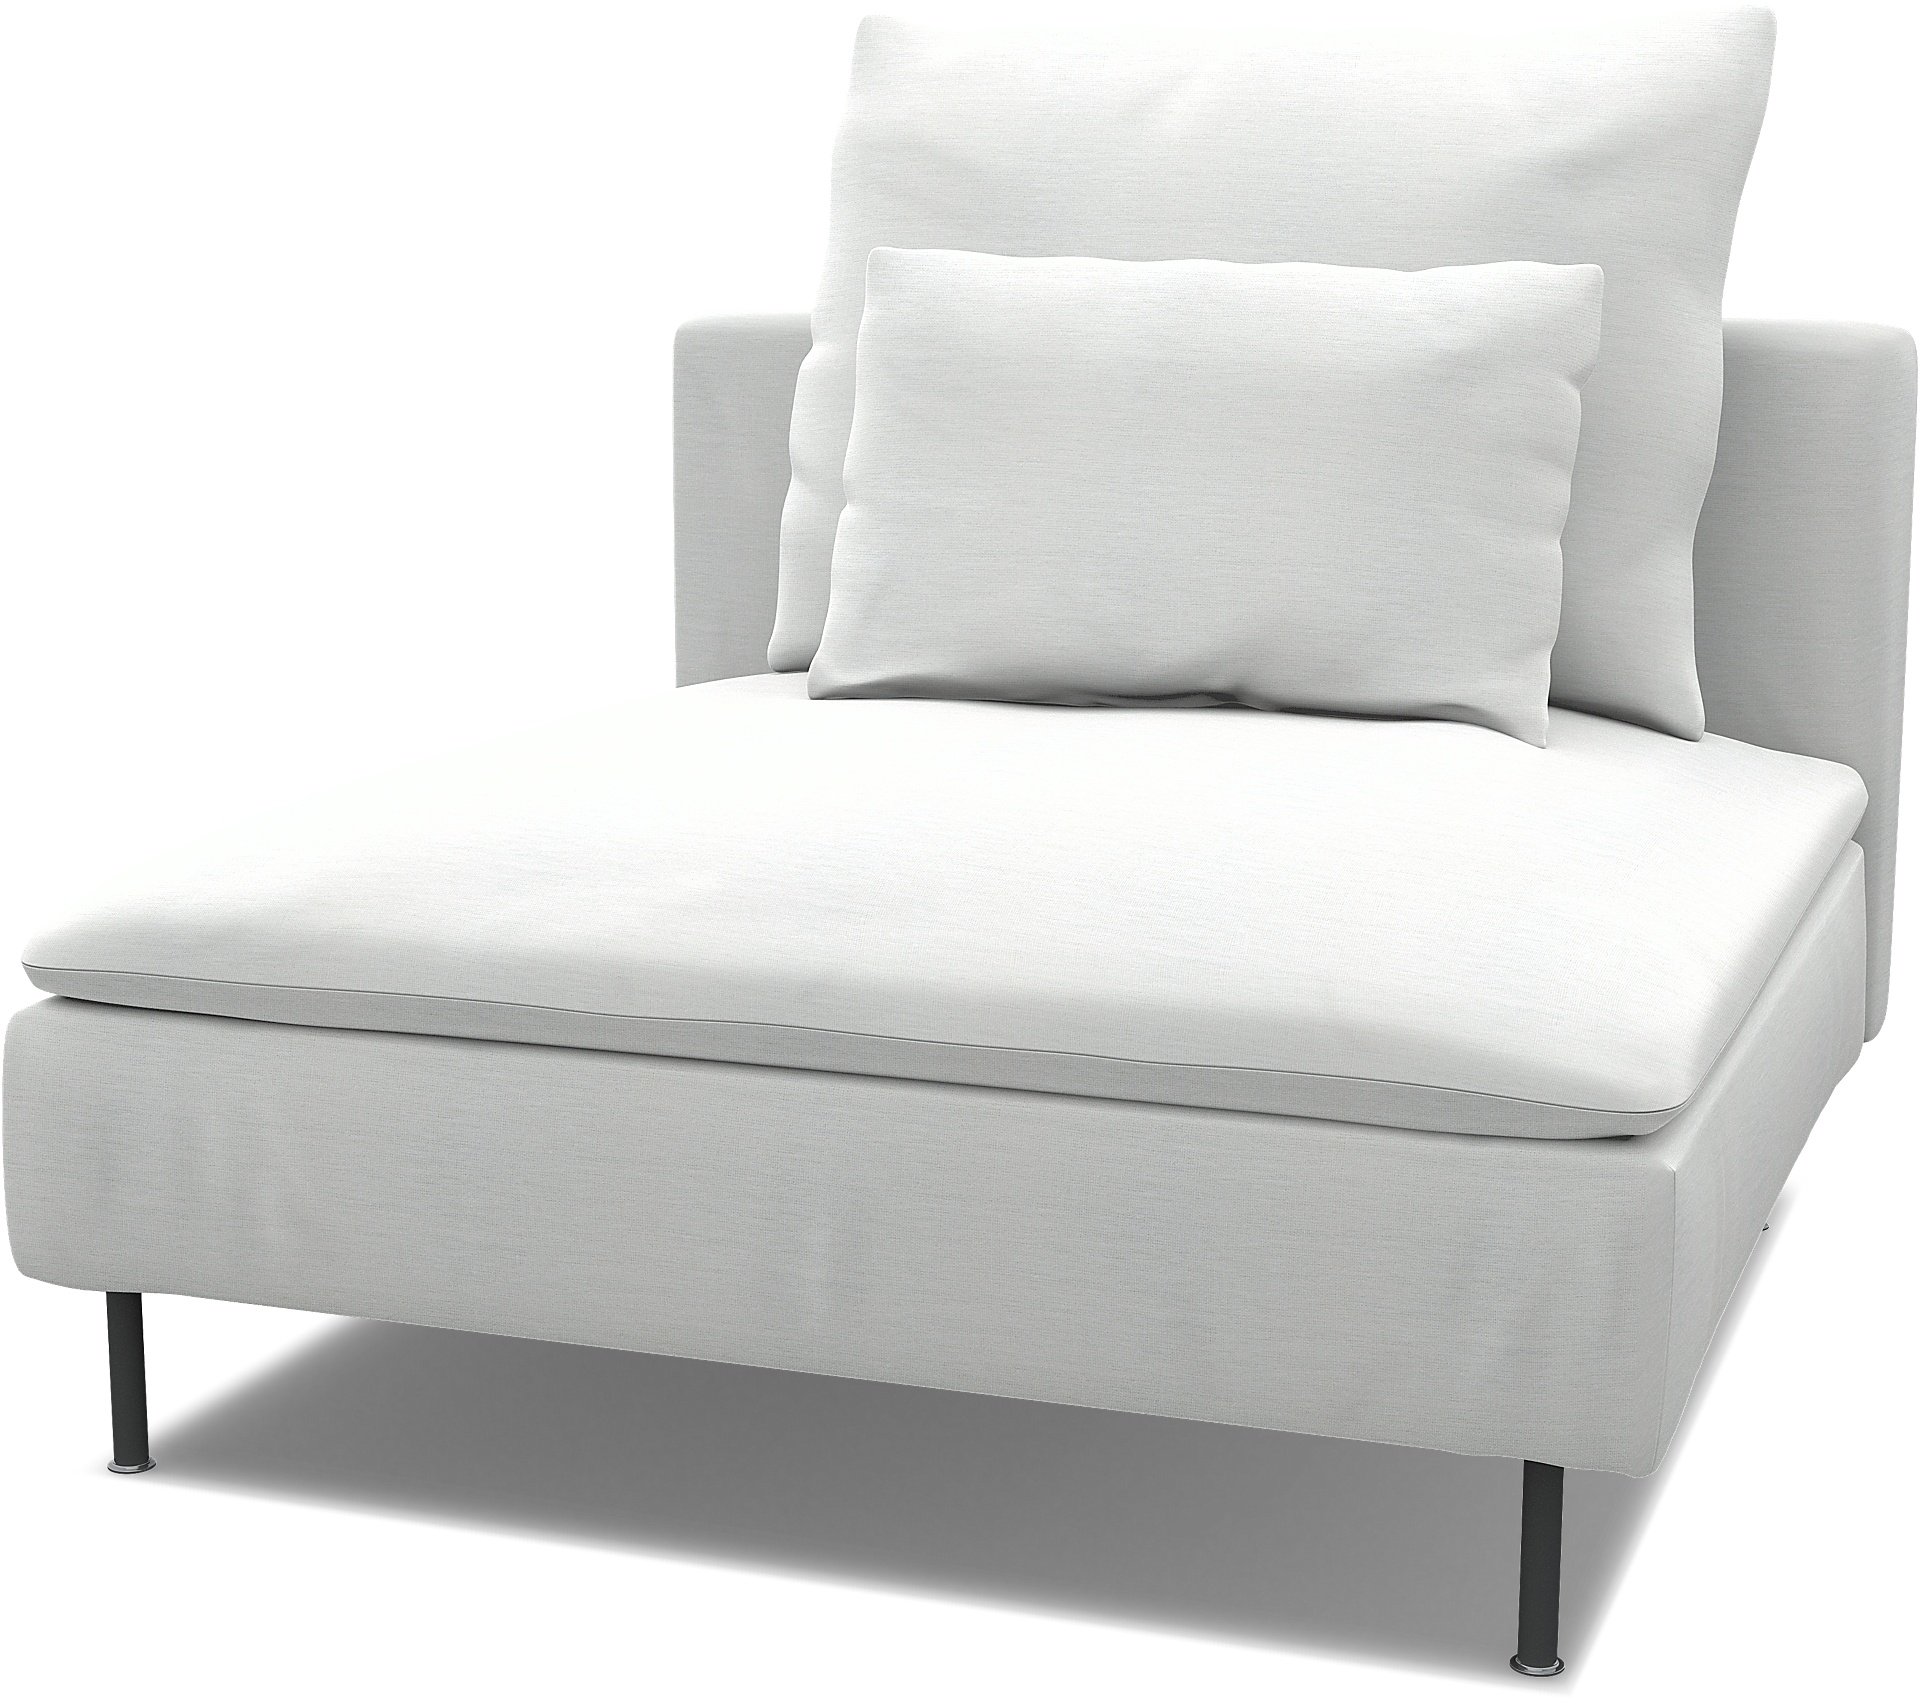 Spare back cushion cover for SODERHAMN 1 SEAT SECTION, White, Linen - Bemz